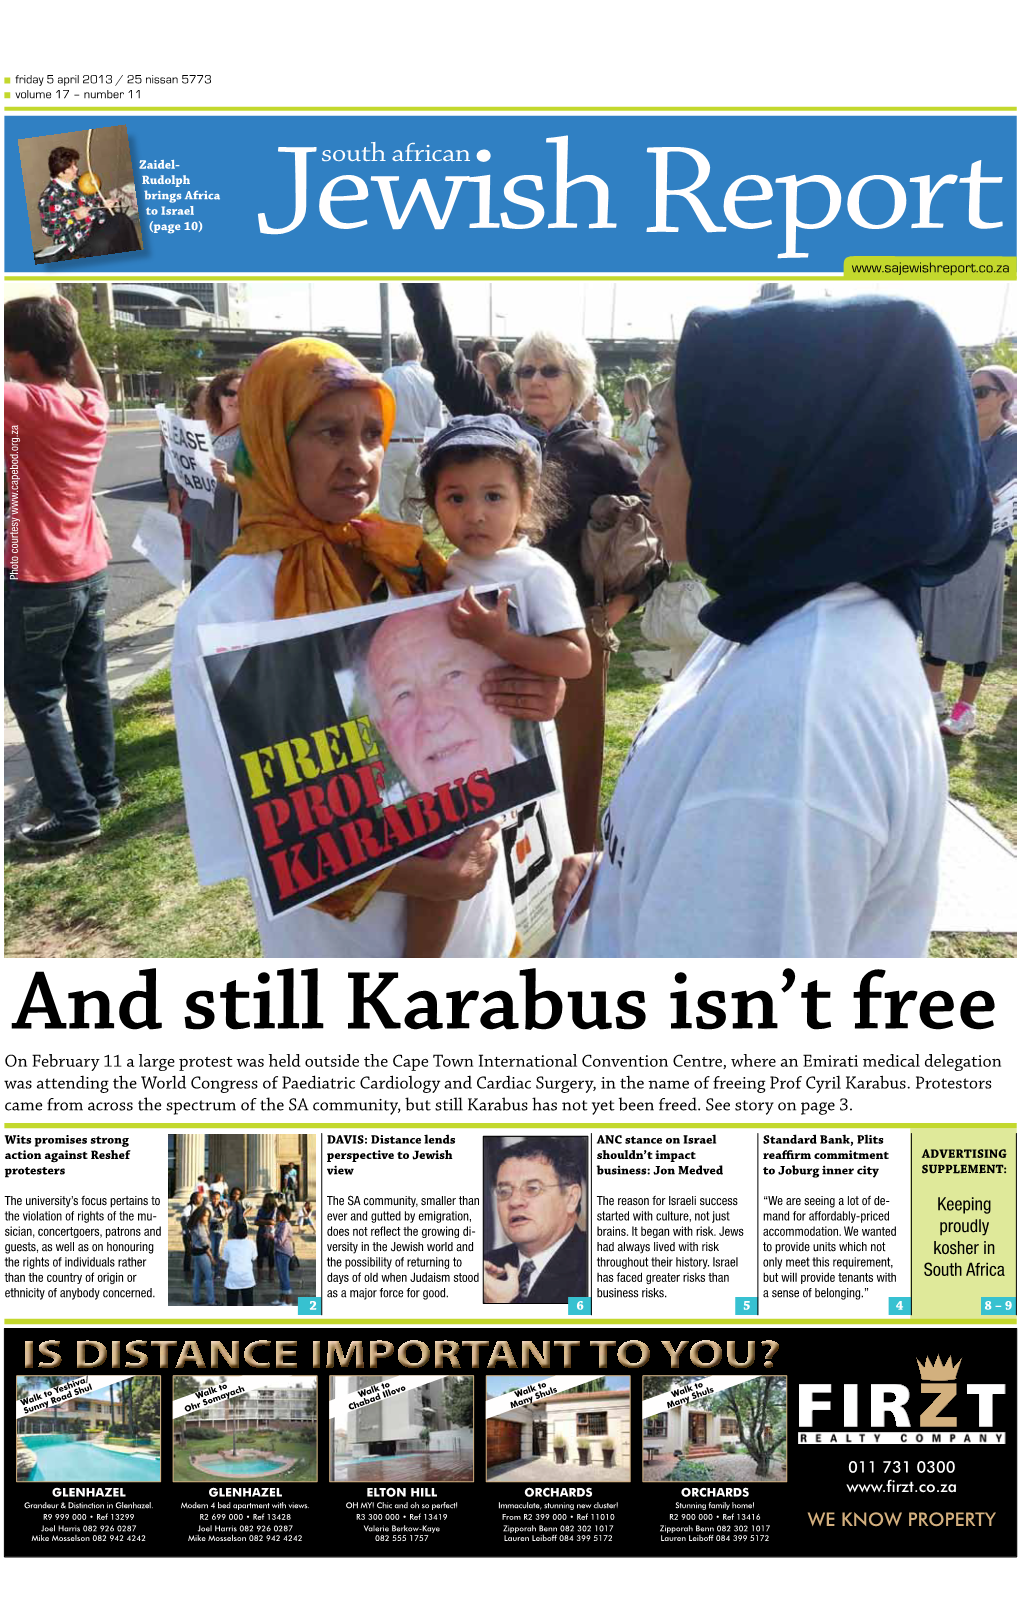 And Still Karabus Isn't Free